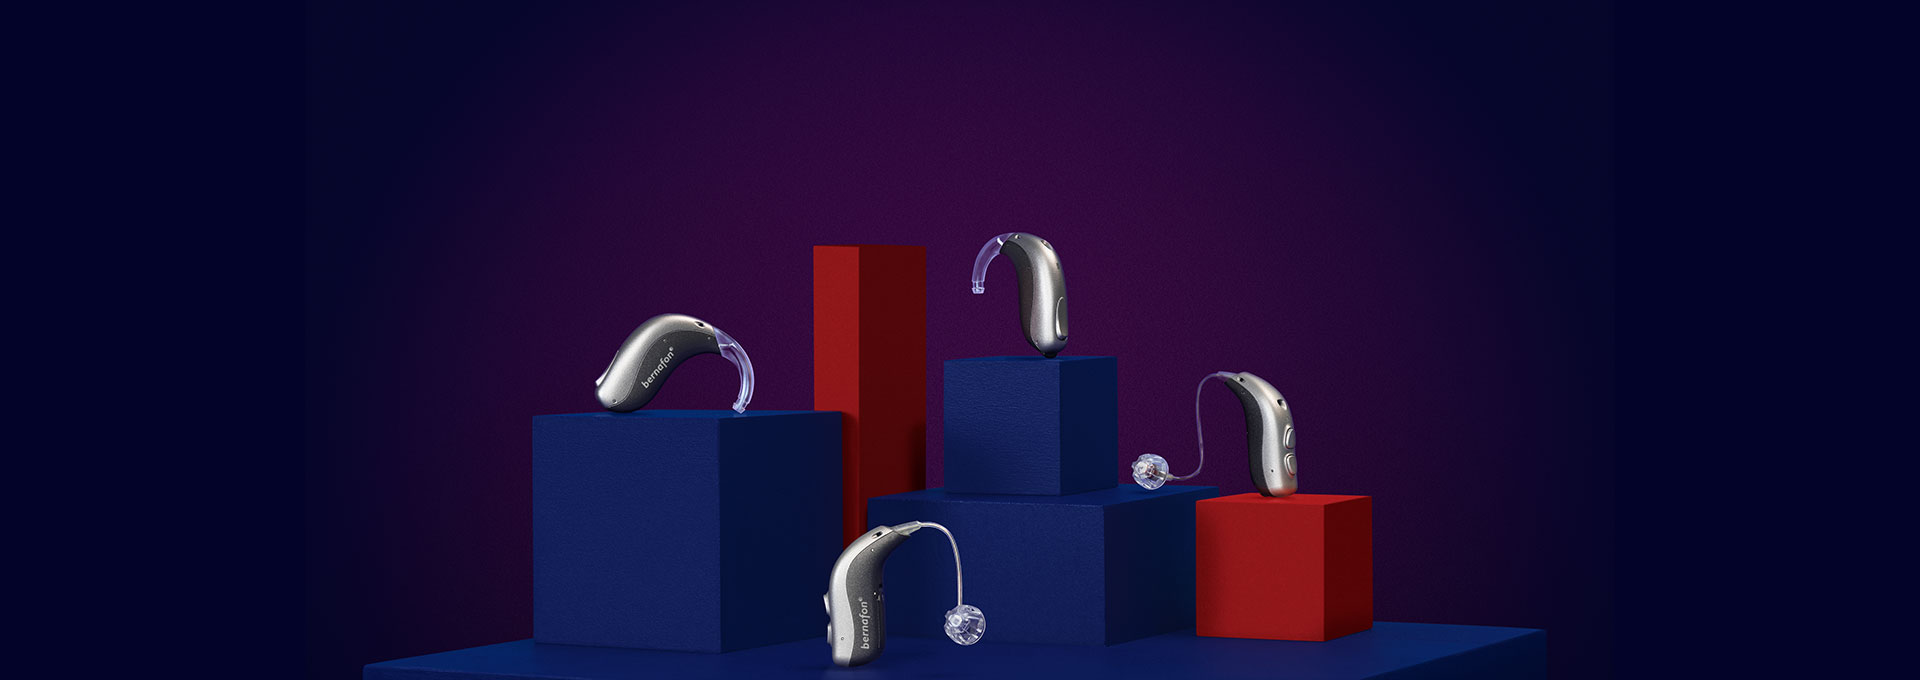 4 audífonos Bernafon Alpha (miniBTE T R, miniRITE T R, miniBTE T, miniRITE T) en cubos rojos y azules con fondo morado